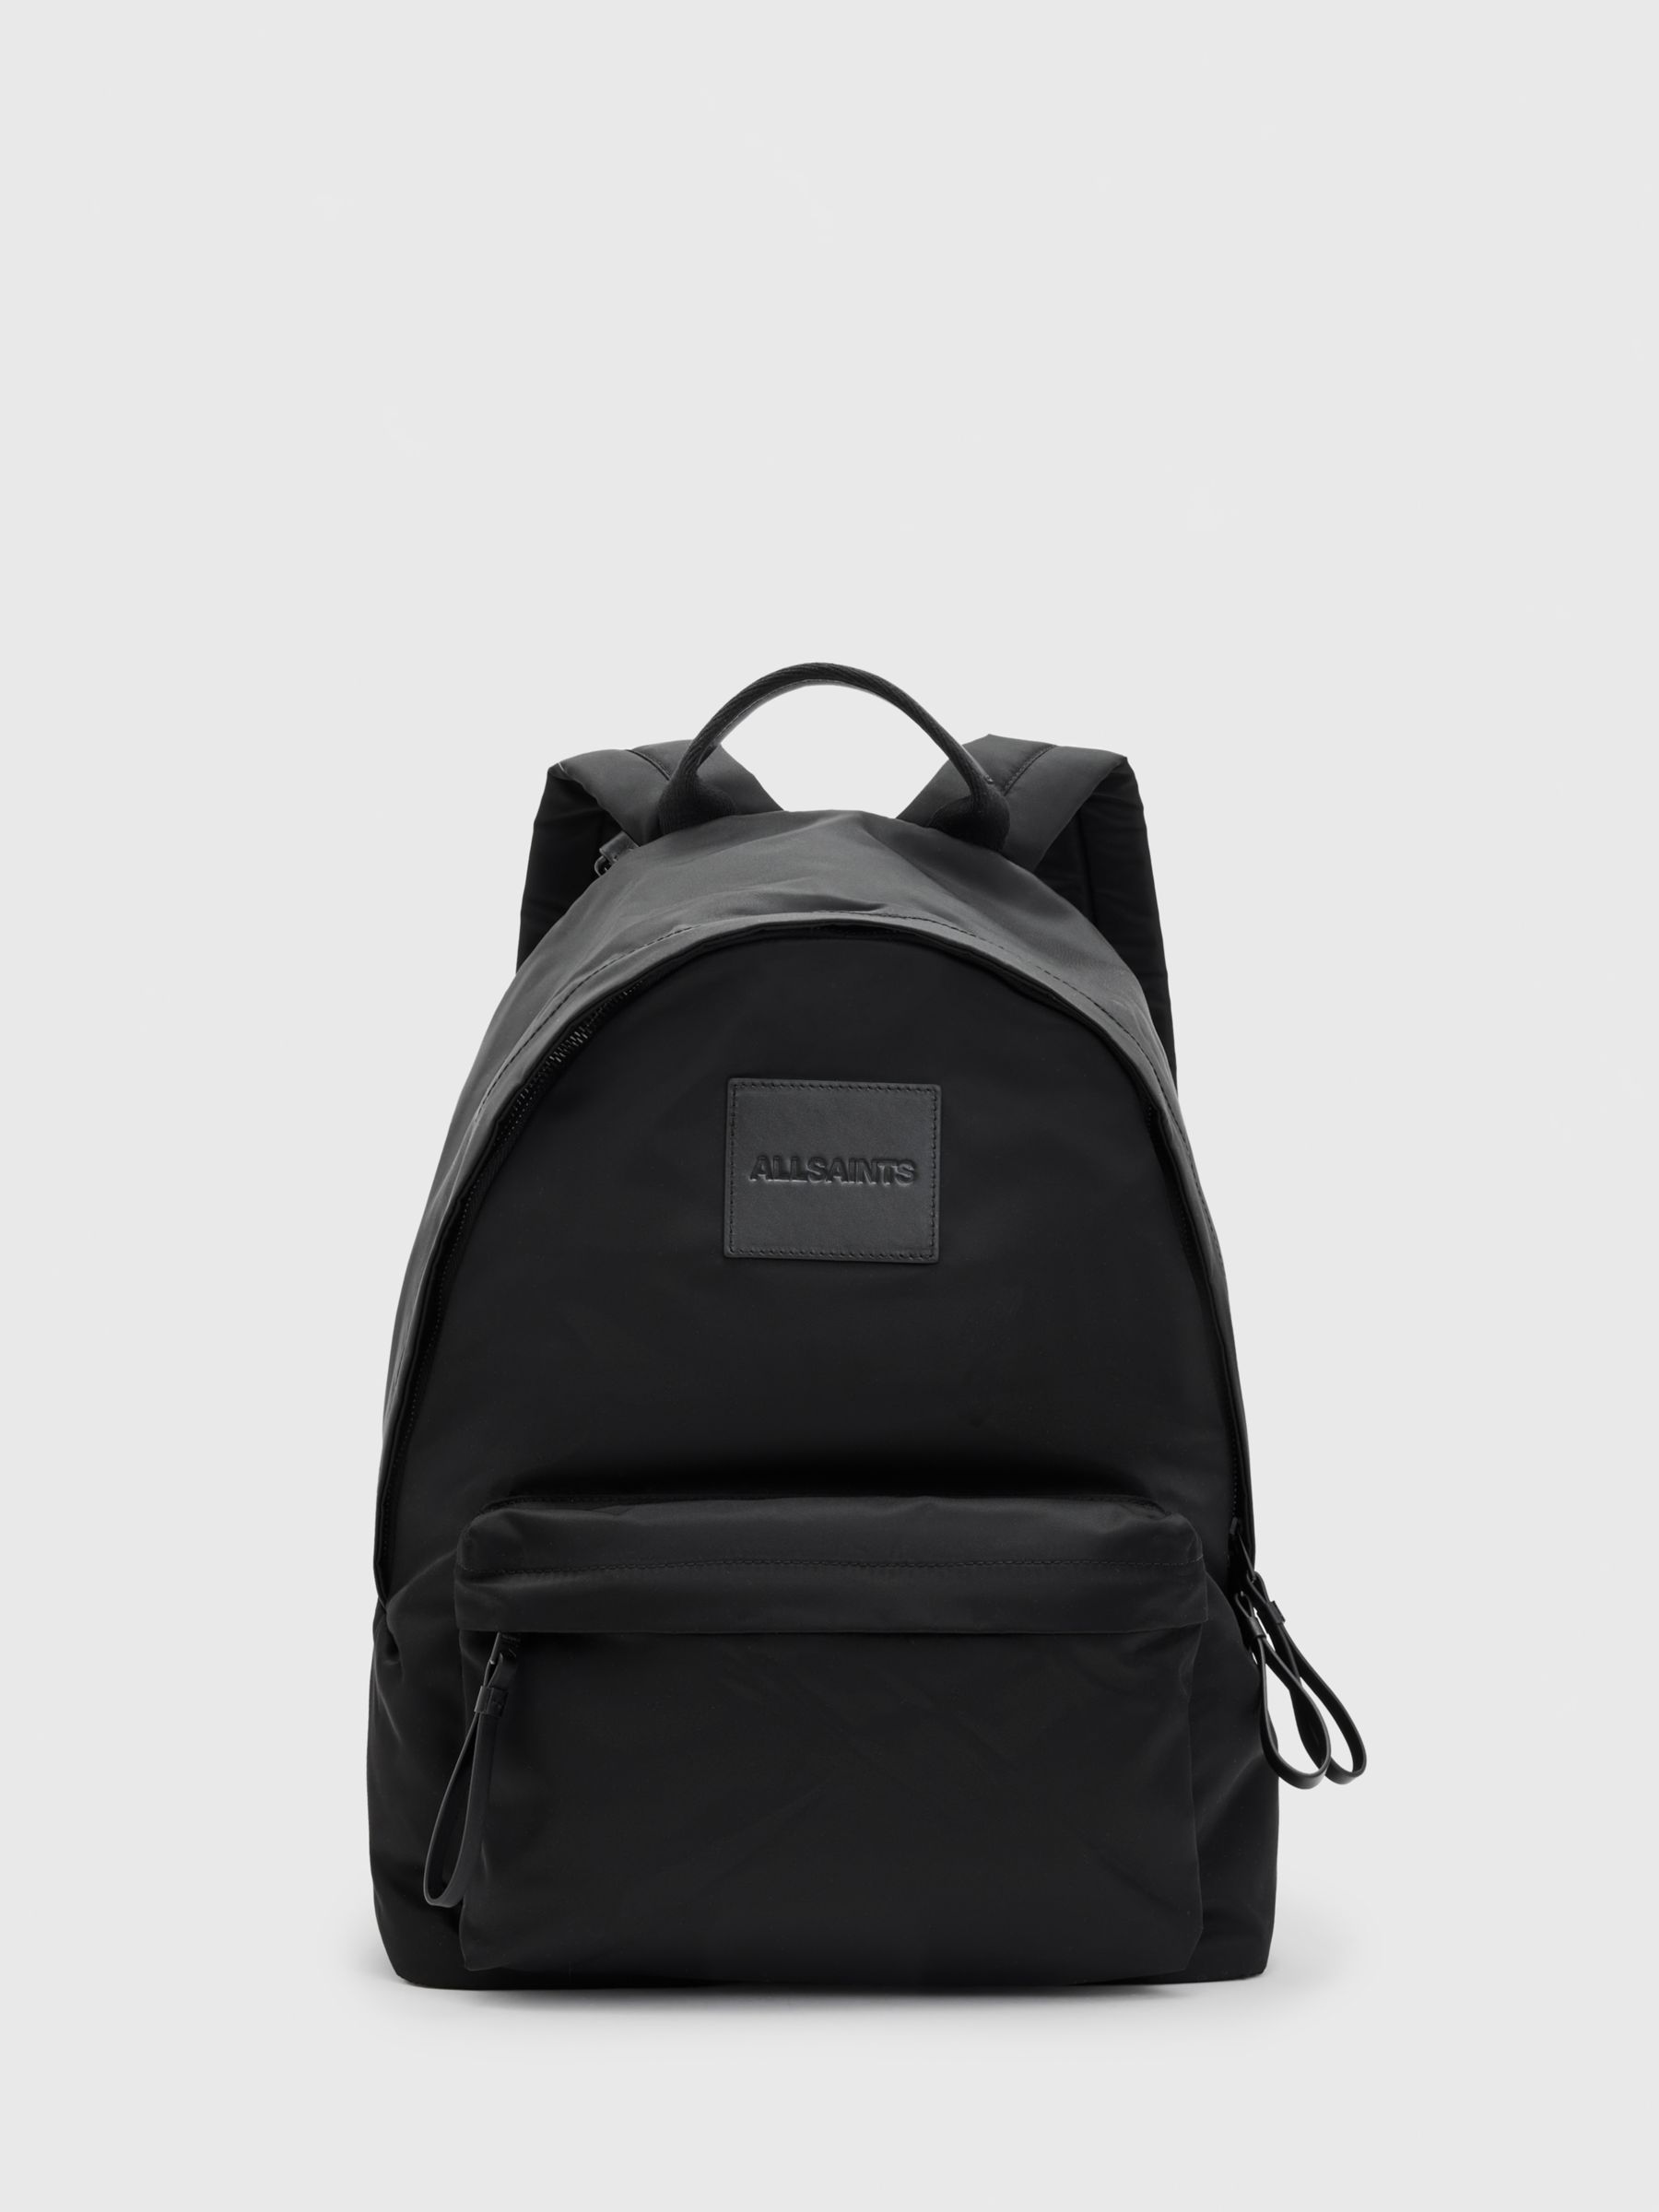 AllSaints Carabiner Backpack, Black at John Lewis & Partners